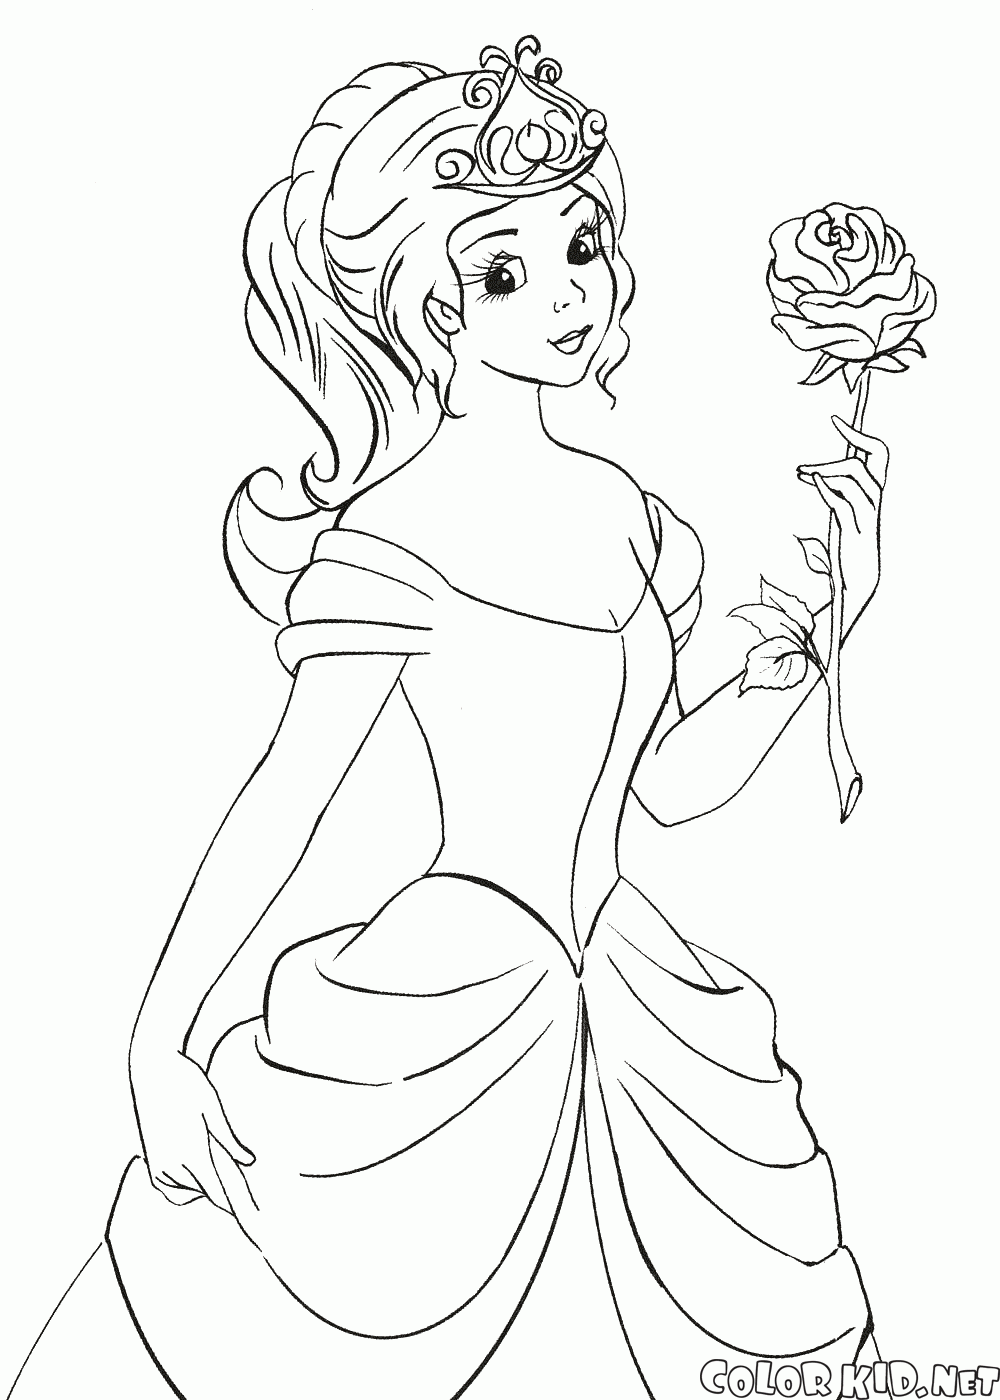 Principessa tiene una rosa